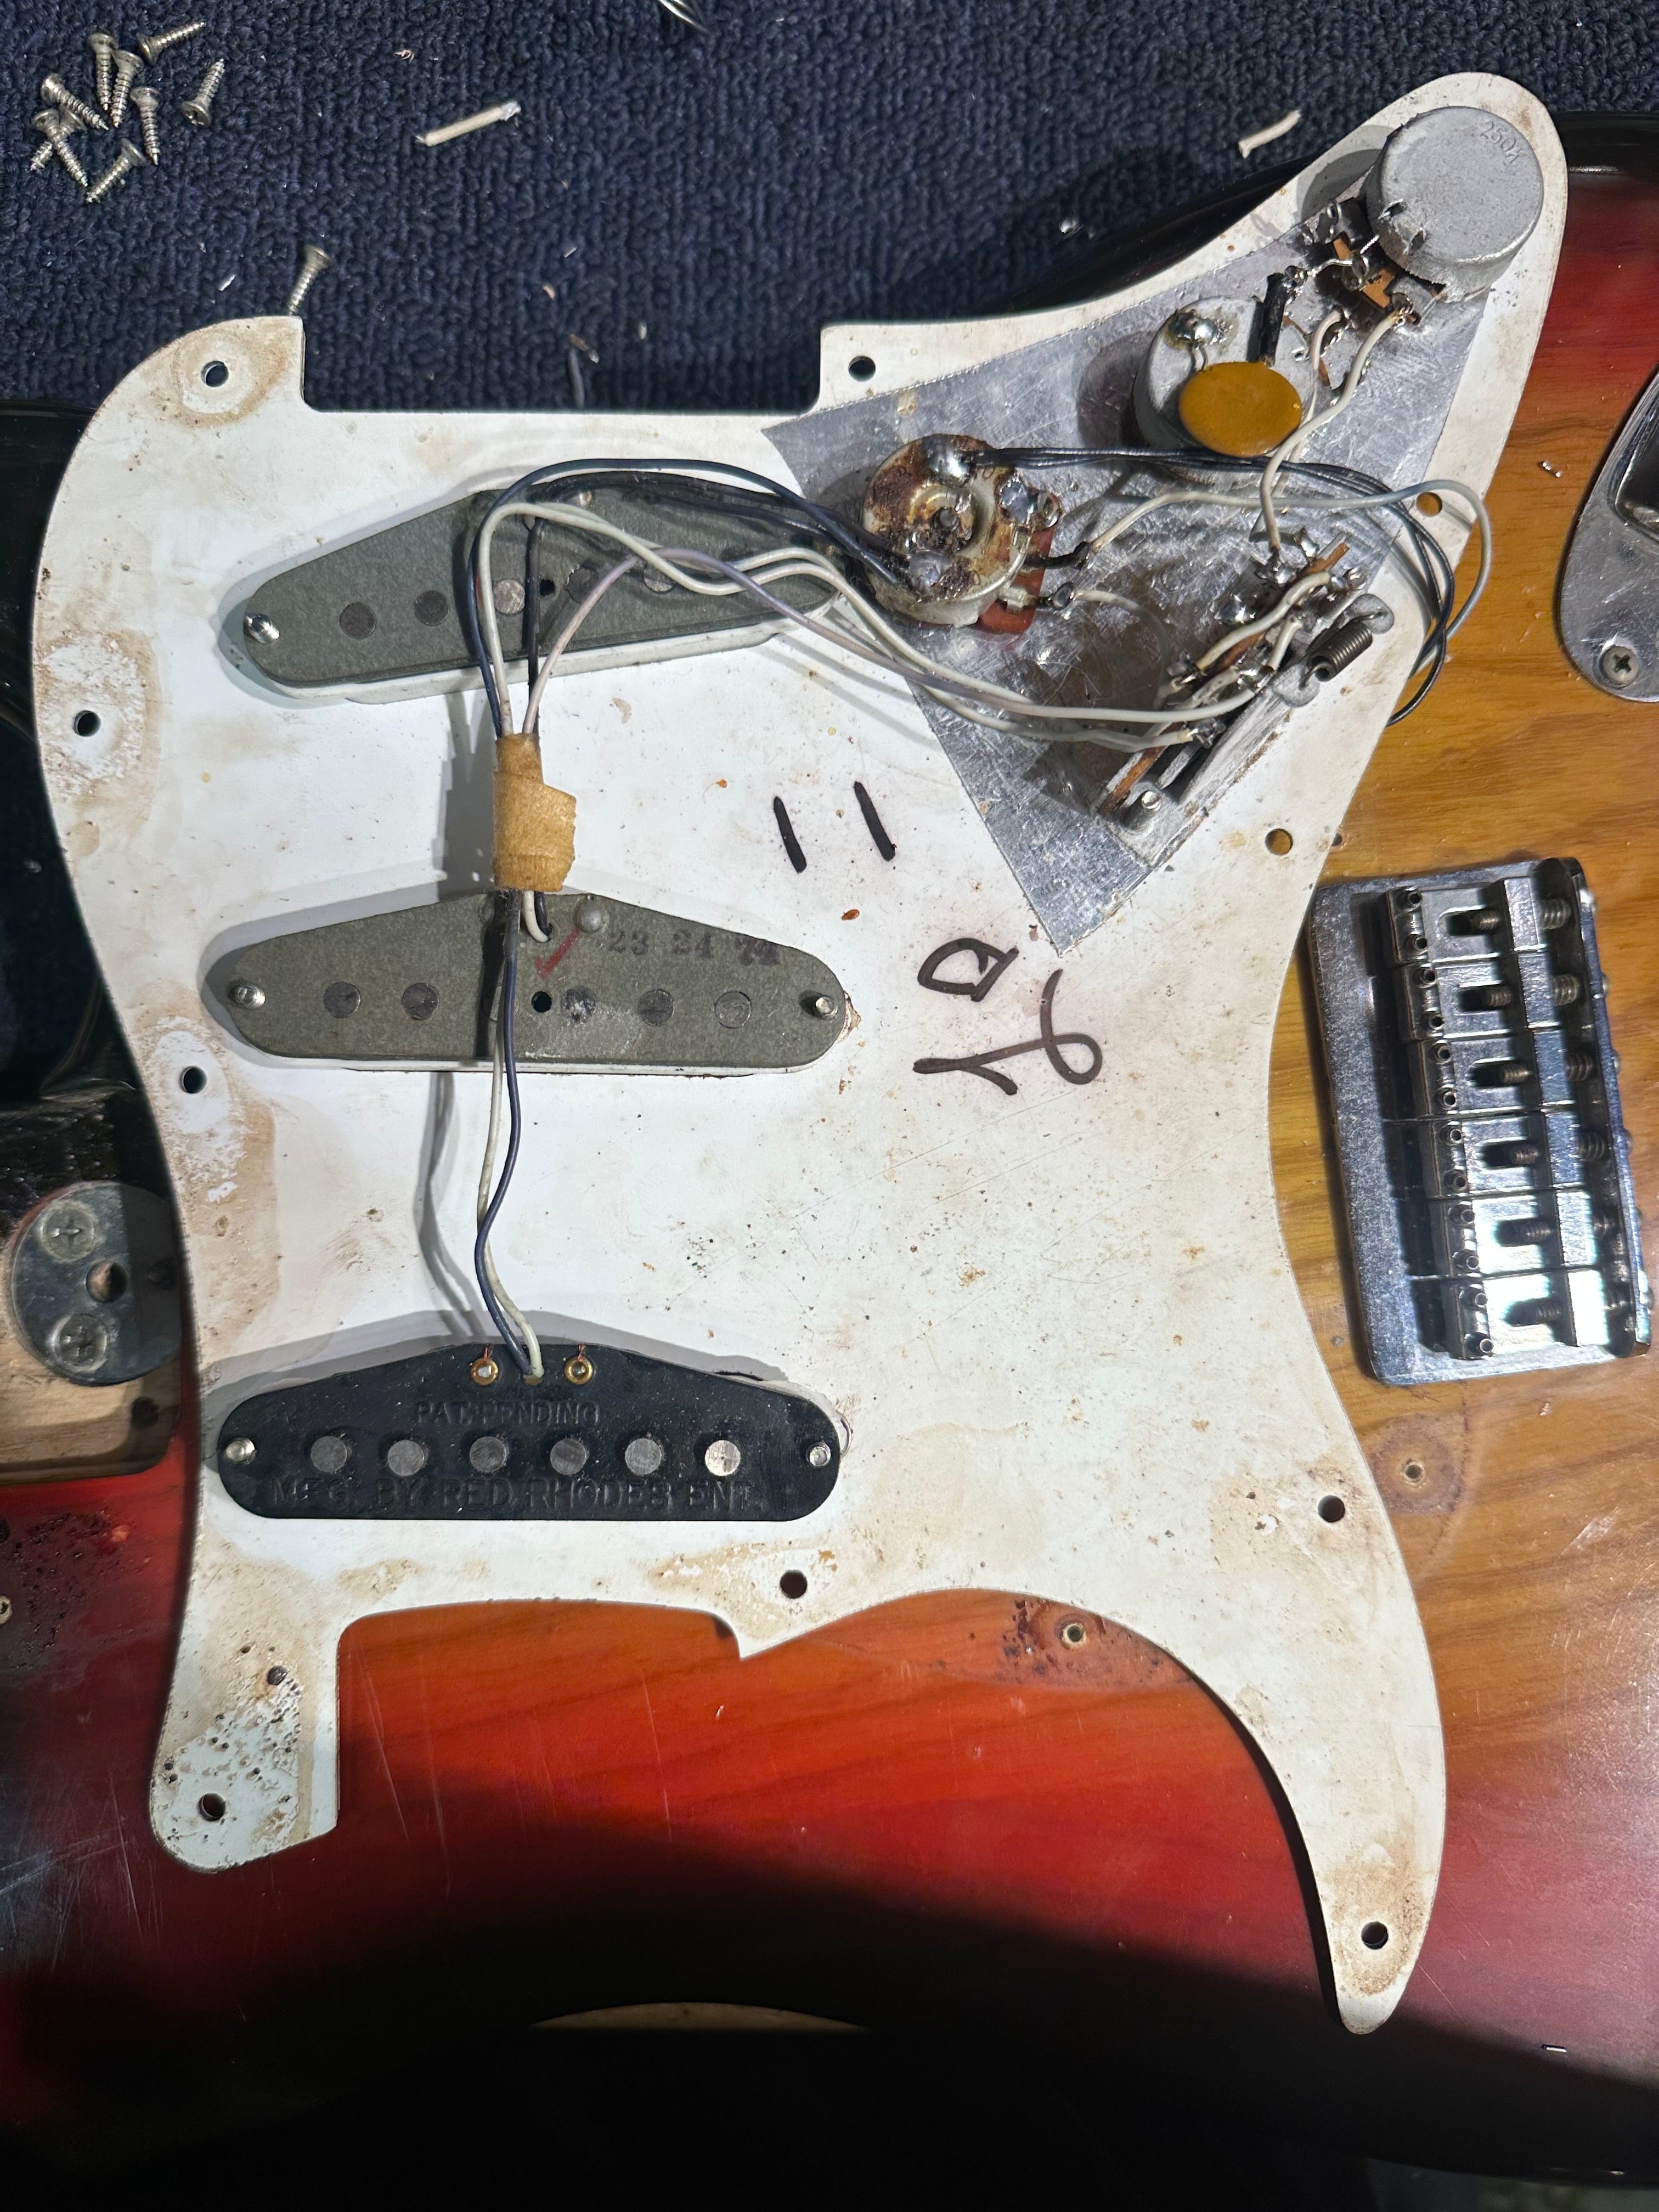 Fender Stratocaster Hardtail Sunburst 1974 Electric Guitars / Solid Body